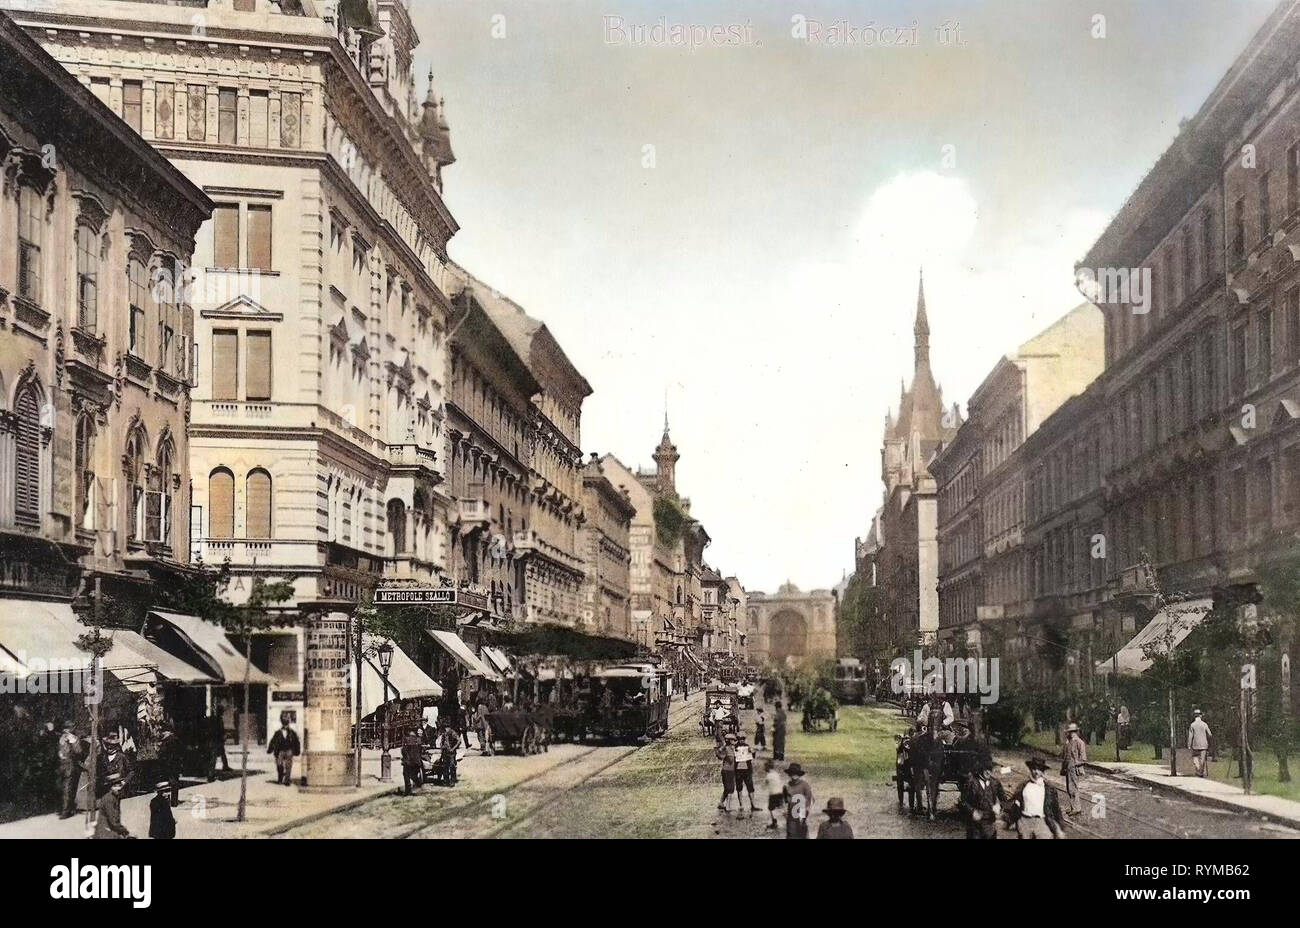 Rákóczi út, 1905, Budapest, Rakoczi Straße mit Straßenbahnen und Fuhrwerken, Hungary Stock Photo